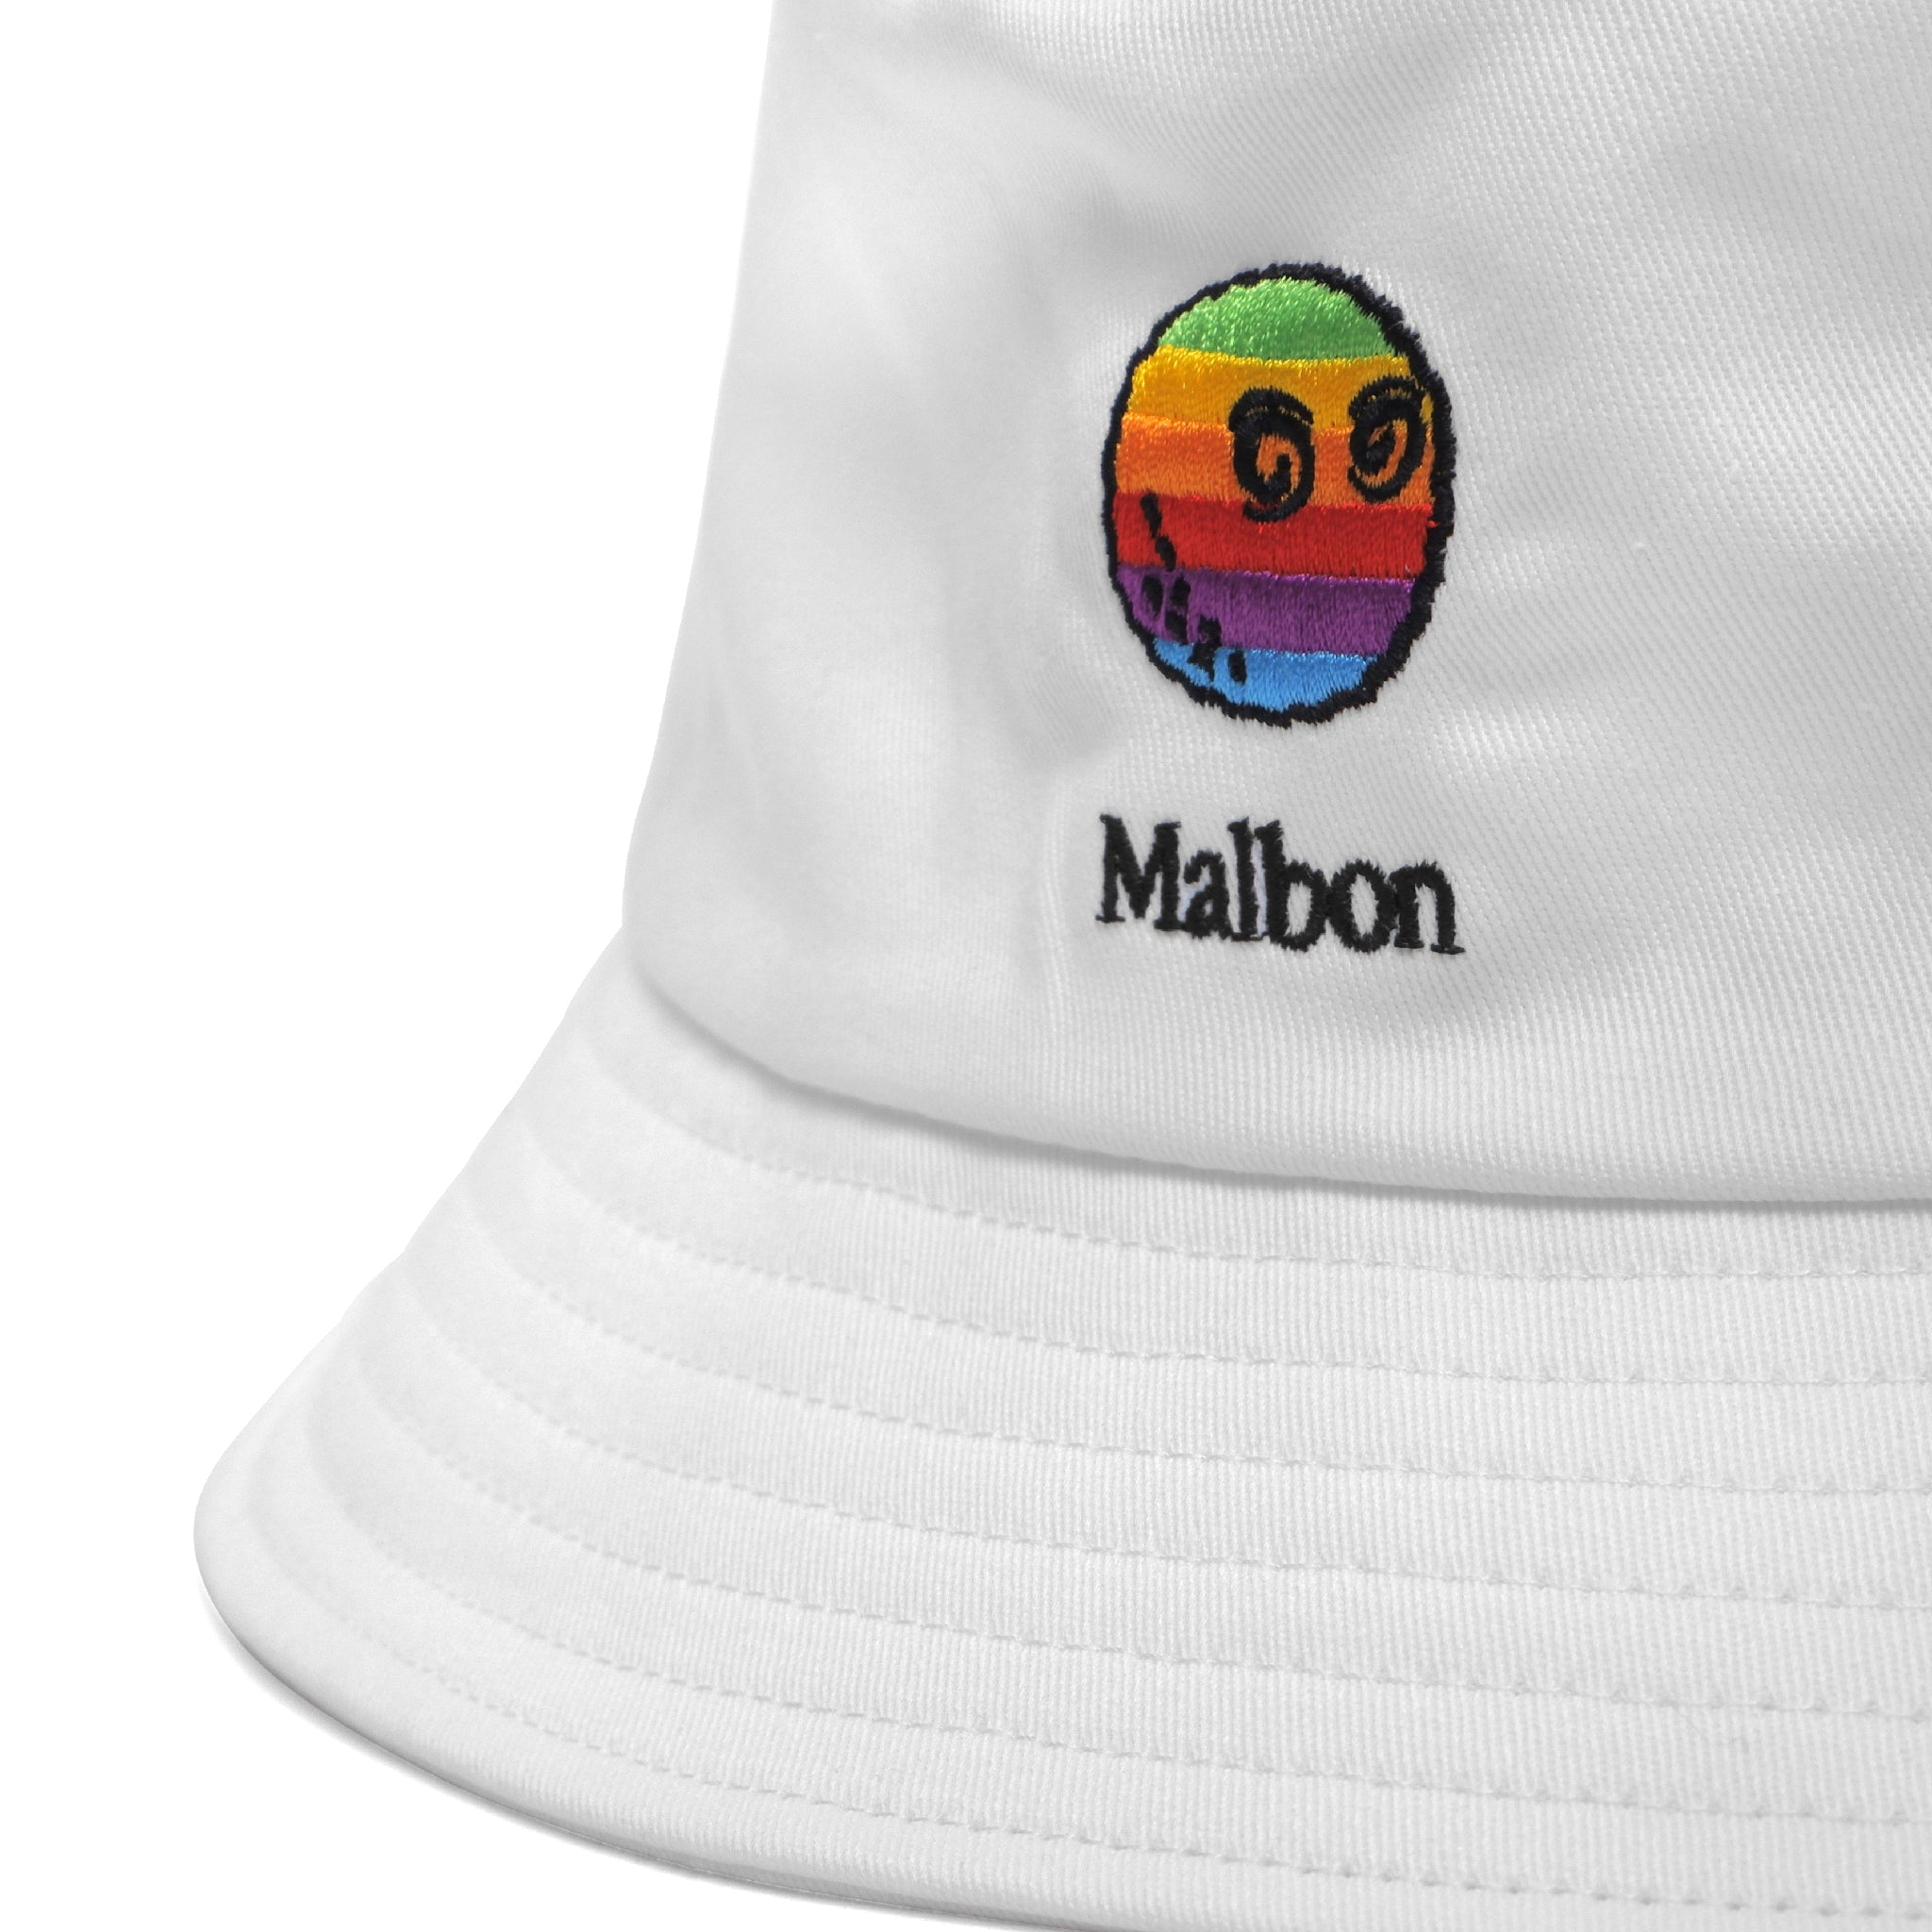 Beams Golf – Malbon Golf